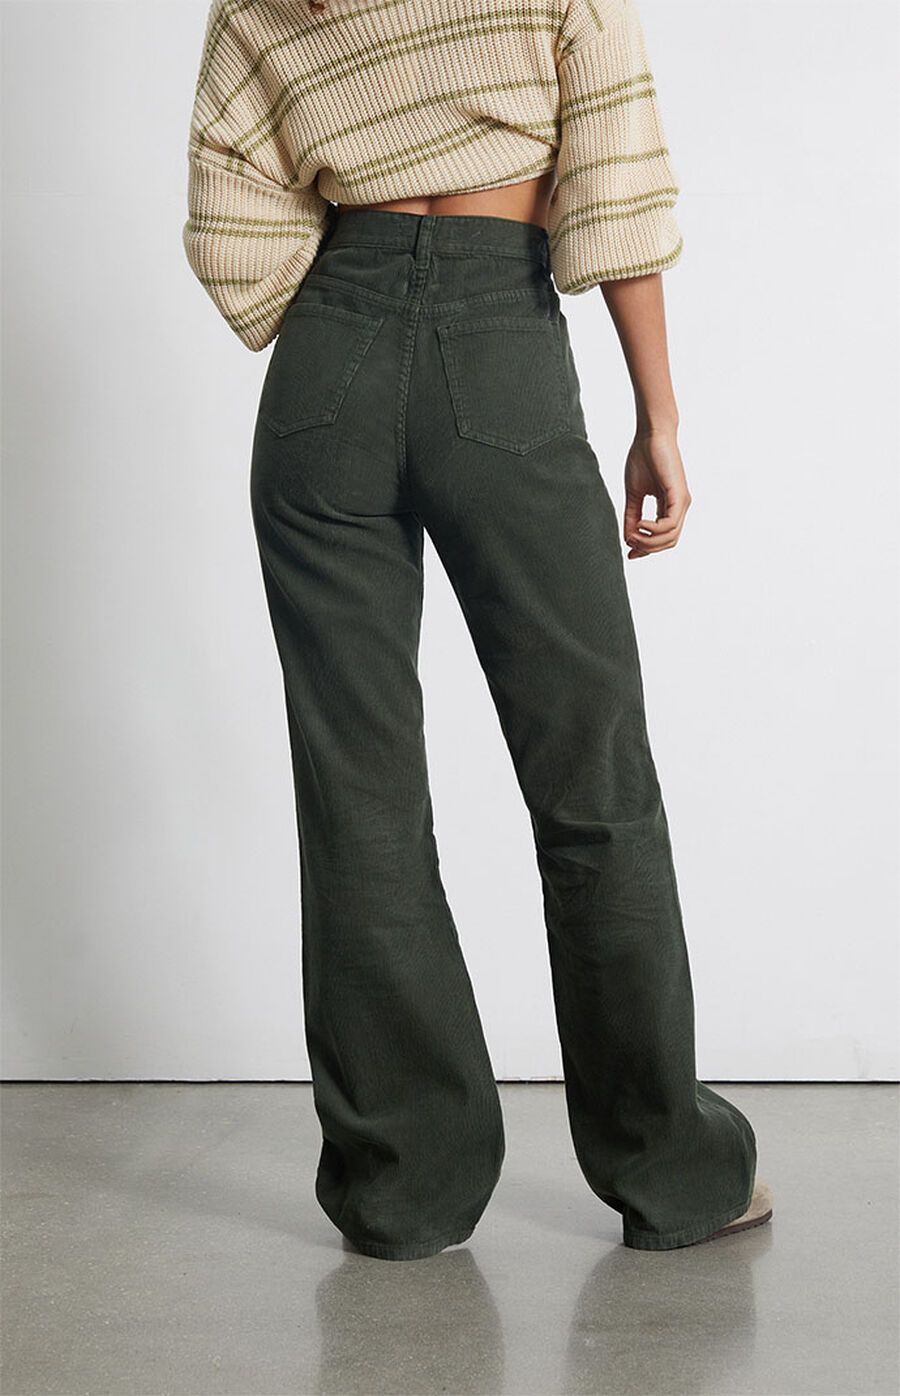 PacSun Green Corduroy High Waisted Bootcut Jeans | PacSun